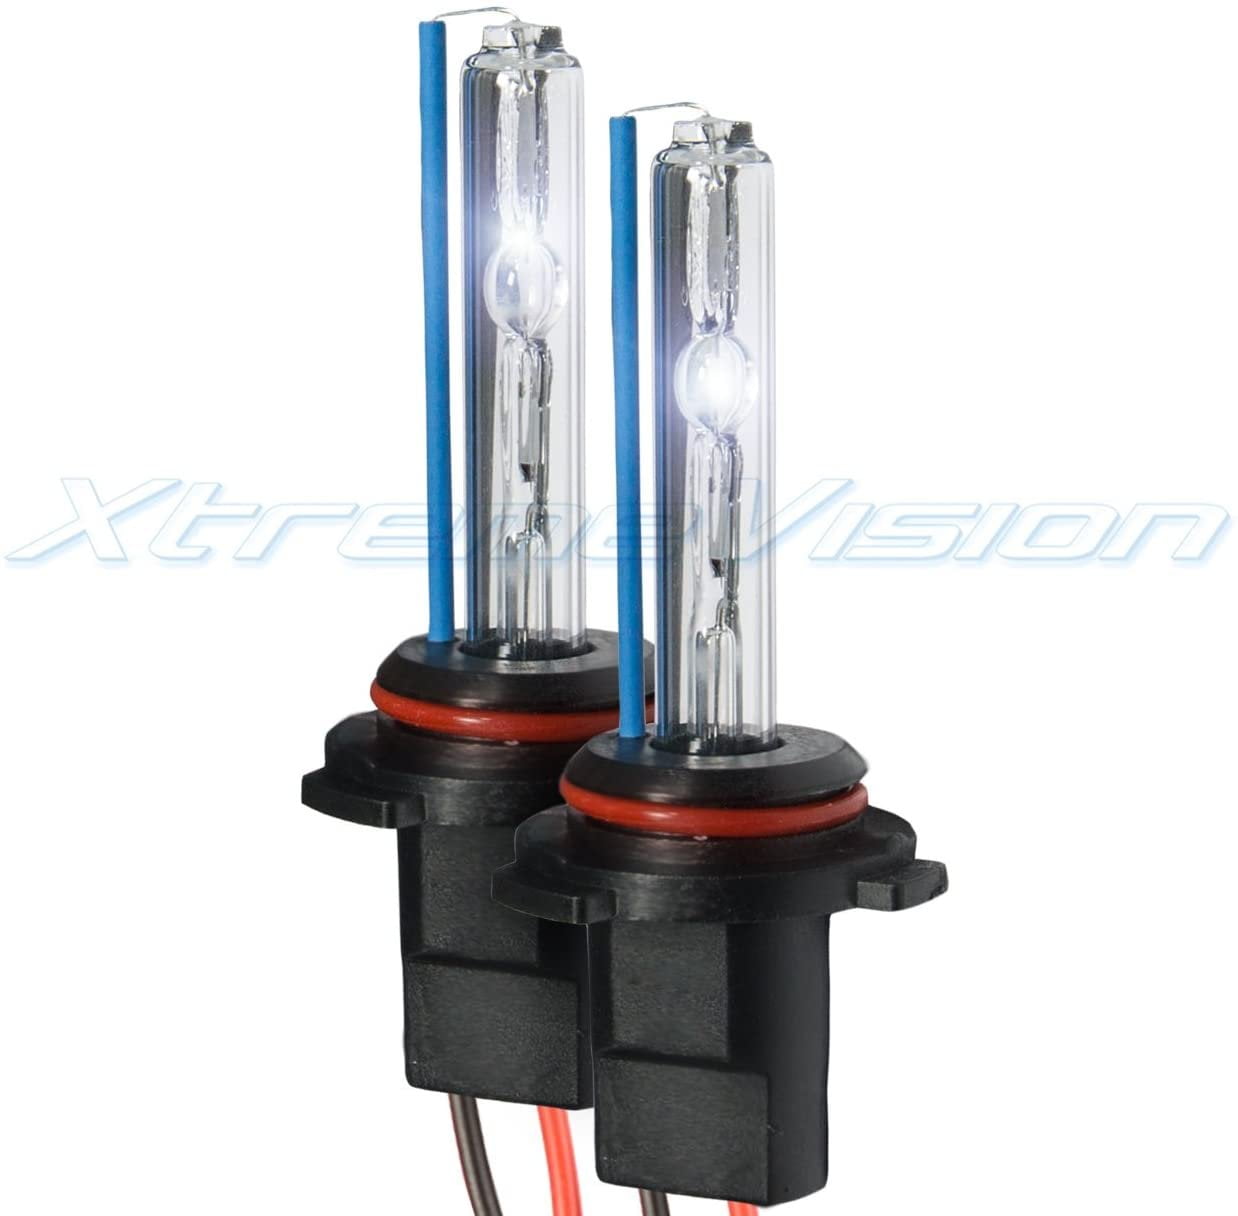 Xtremevision HID Xenon Replacement Bulbs - 9005 8000K - Medium